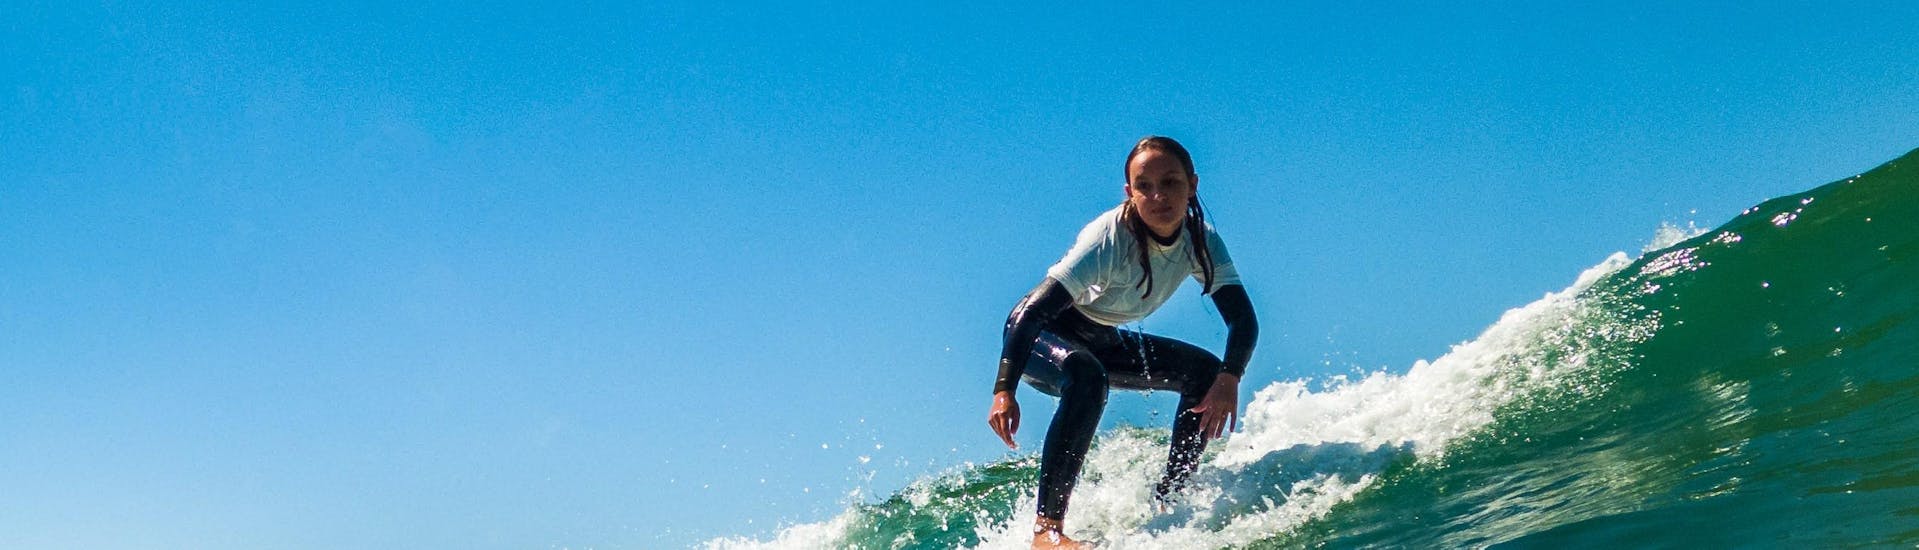 Lezioni private di surf a Costa da Caparica da 8 anni per principianti.